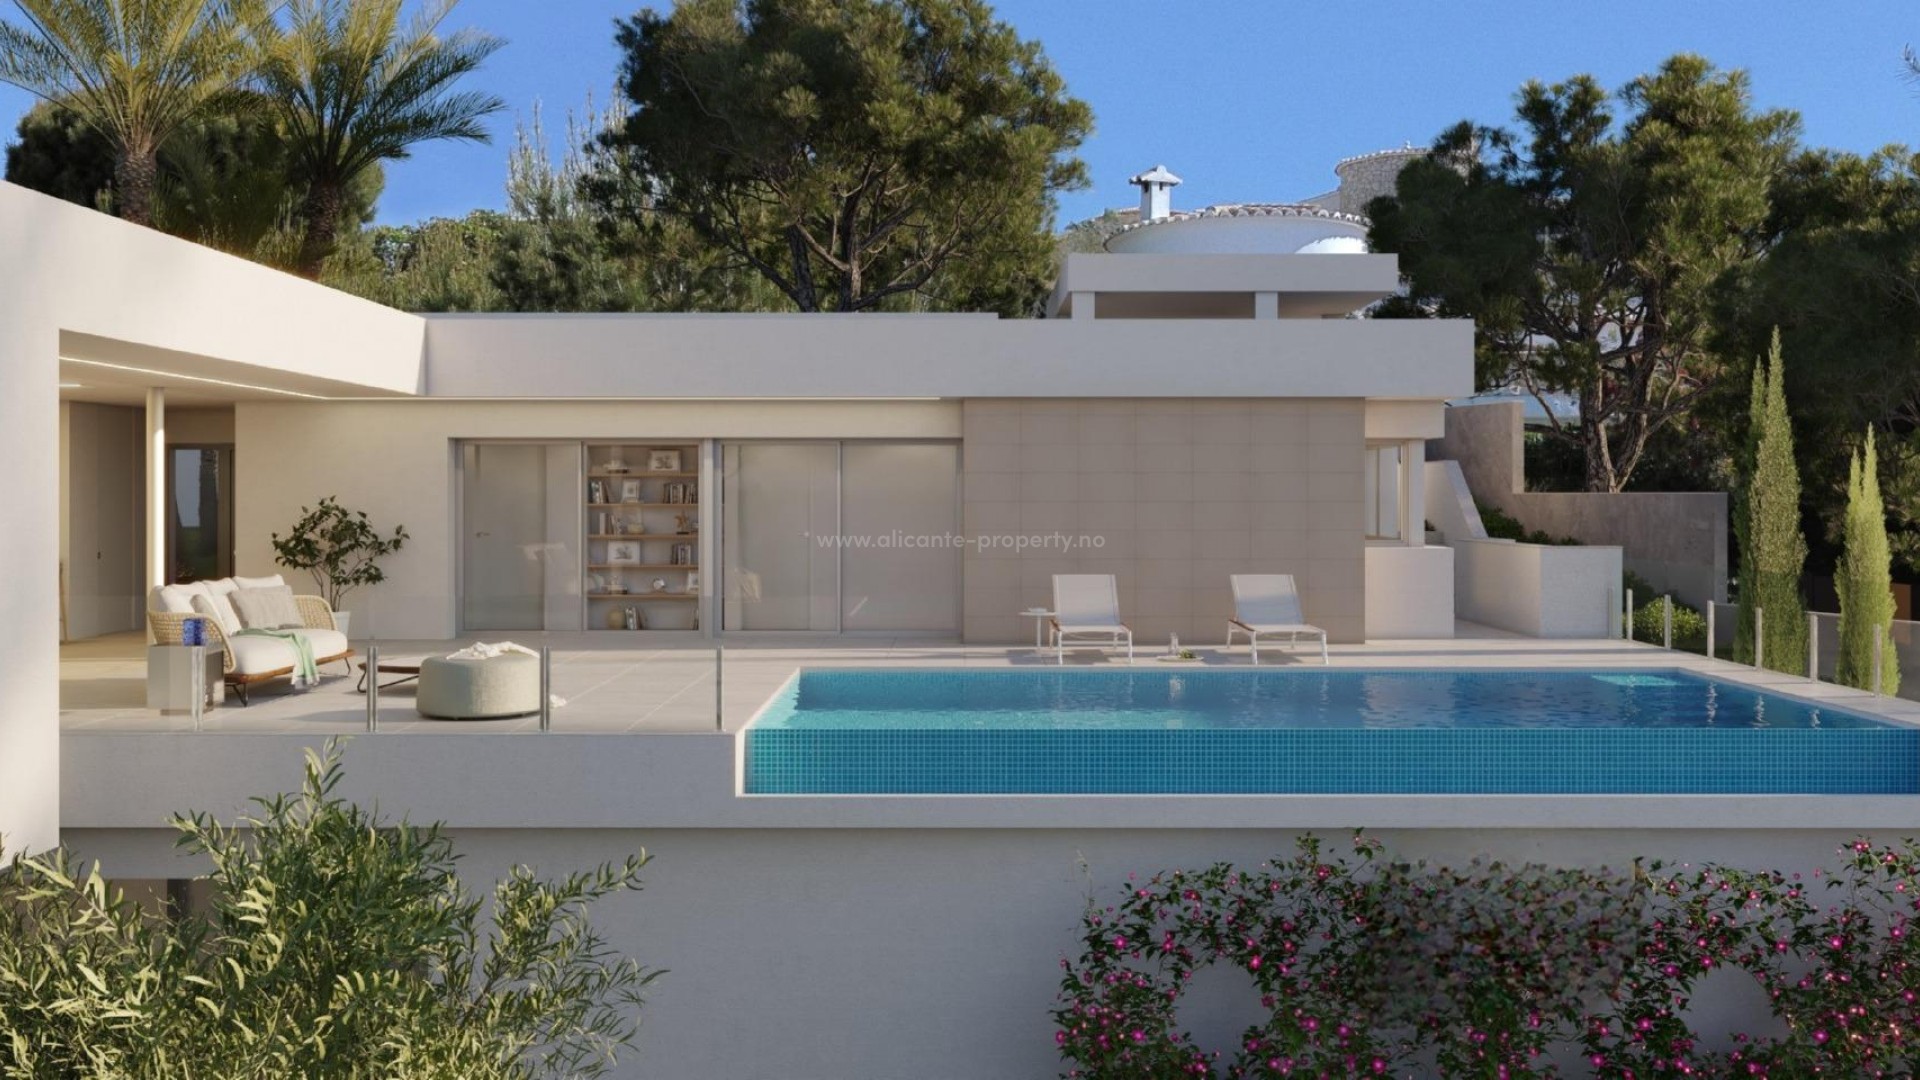 New built luxury villa Benitachell, Cumbre del Sol, 3 bedrooms, 3 bathrooms, fantastically impressive infinity pool merging with the sea.